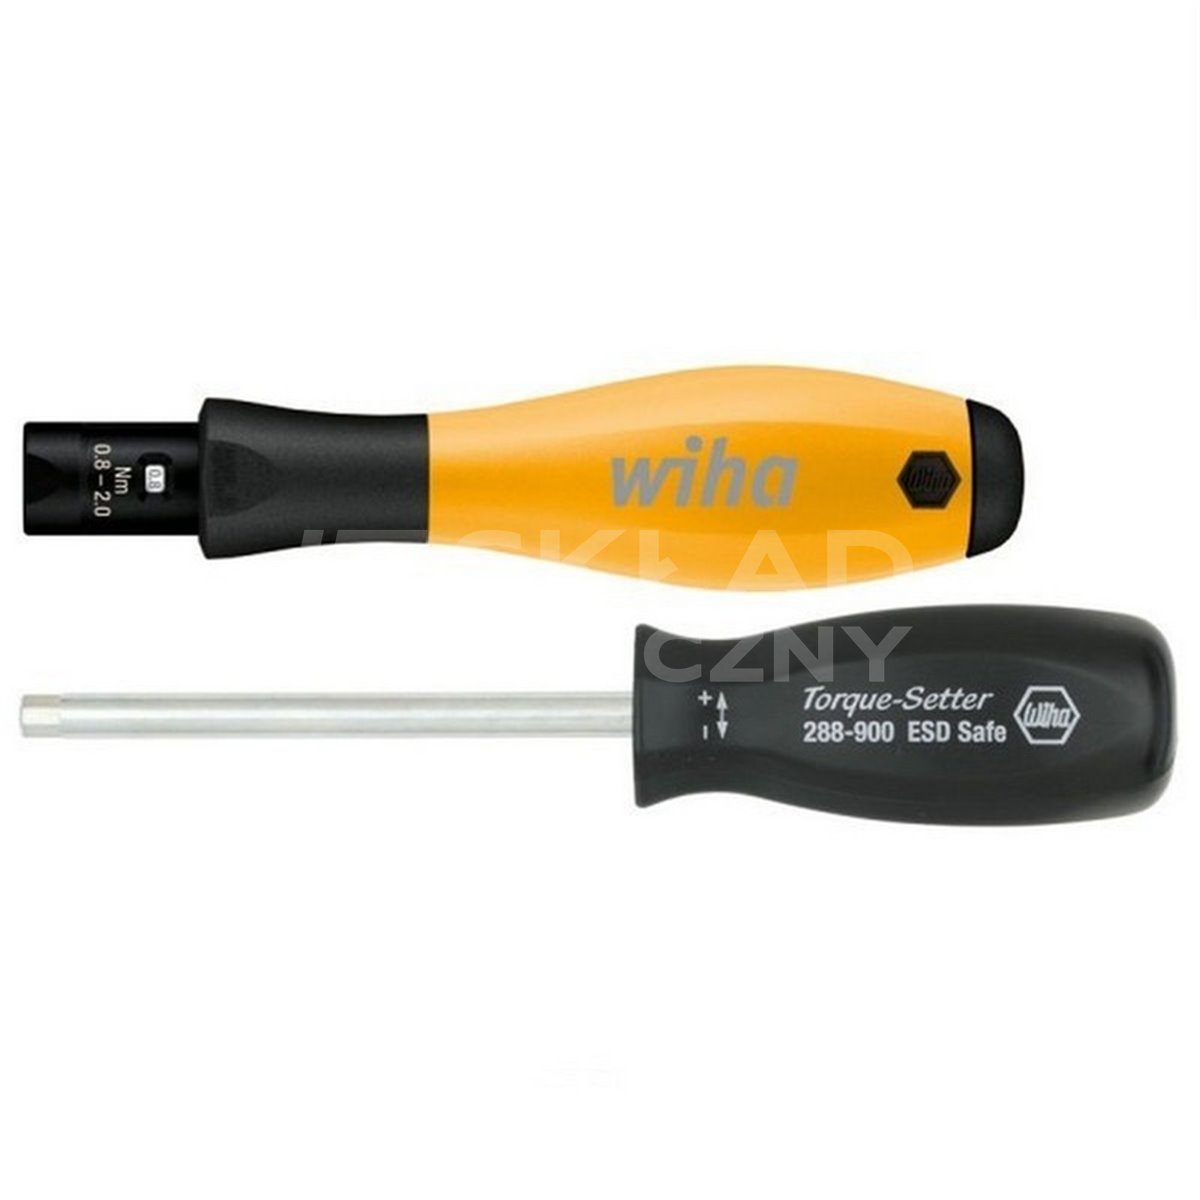 TorqueVario-S ESD 2882 0.04-0.46 127mm Wiha 36851 is a torque screwdriver.